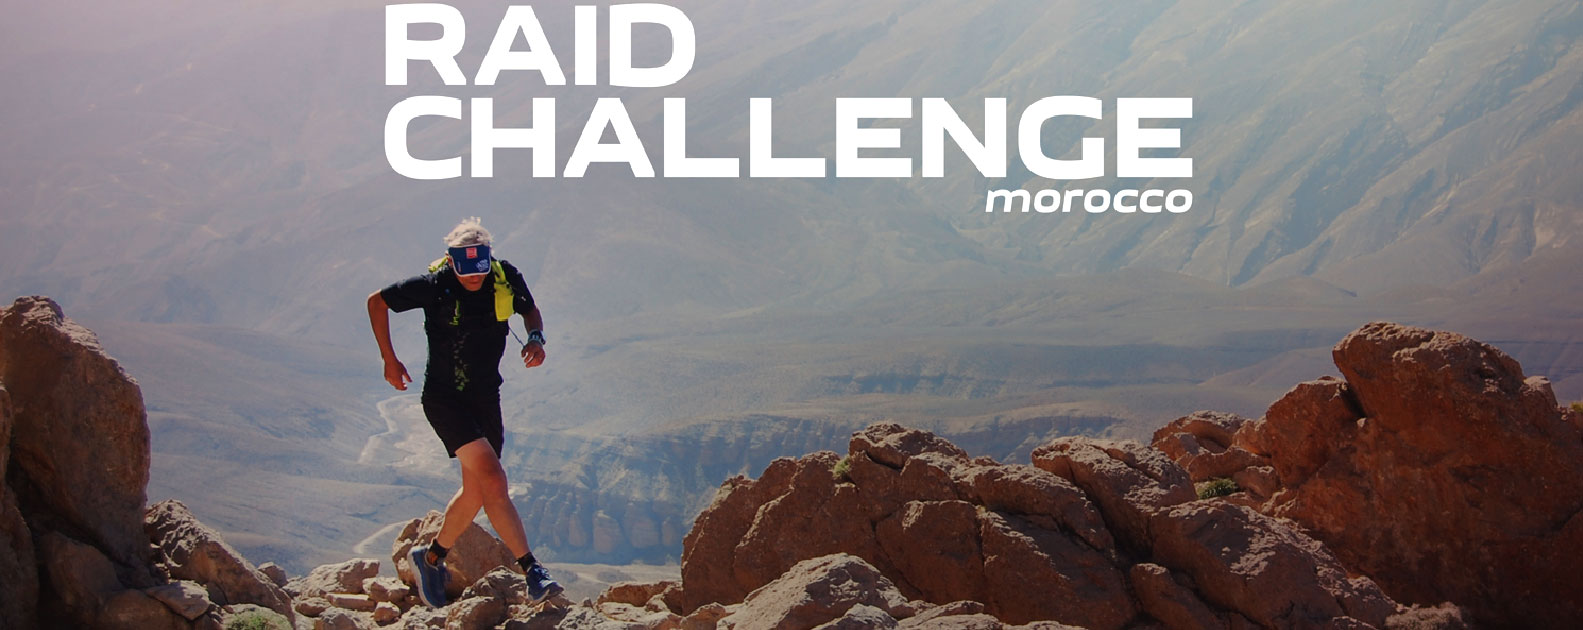 Raid Challenge Morocco